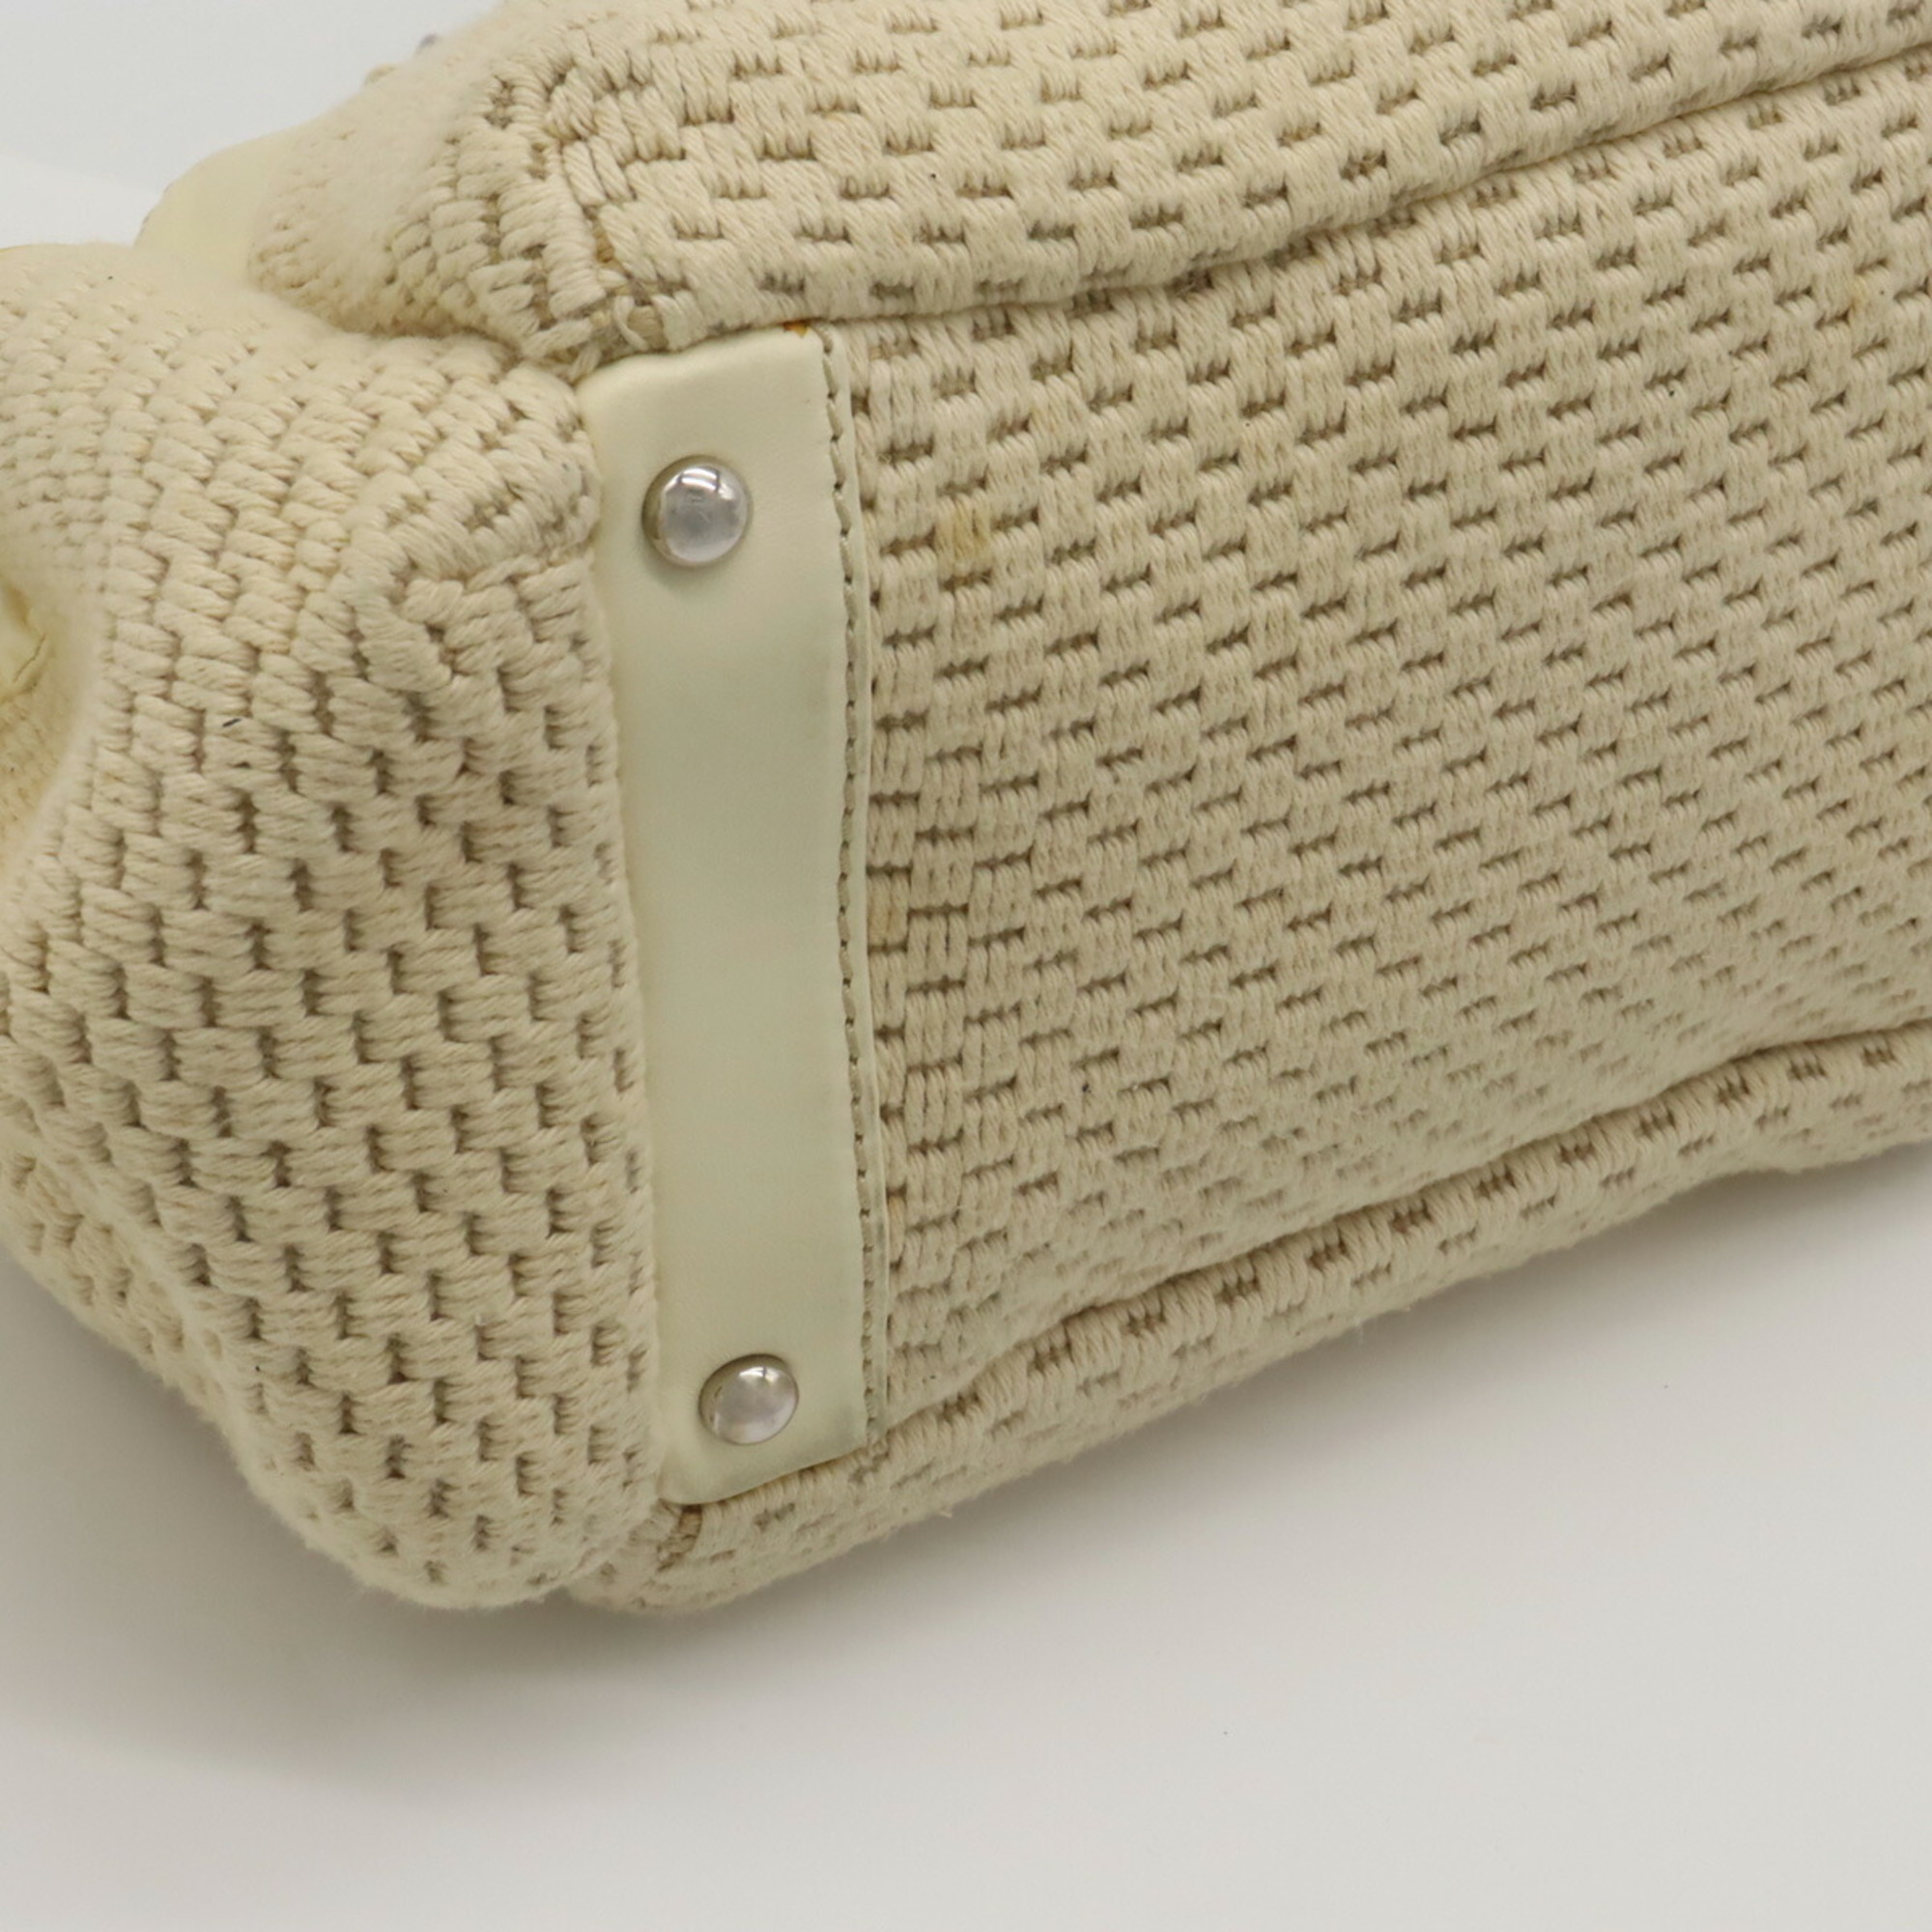 CHANEL Chain bag shoulder tote cotton canvas leather beige cream